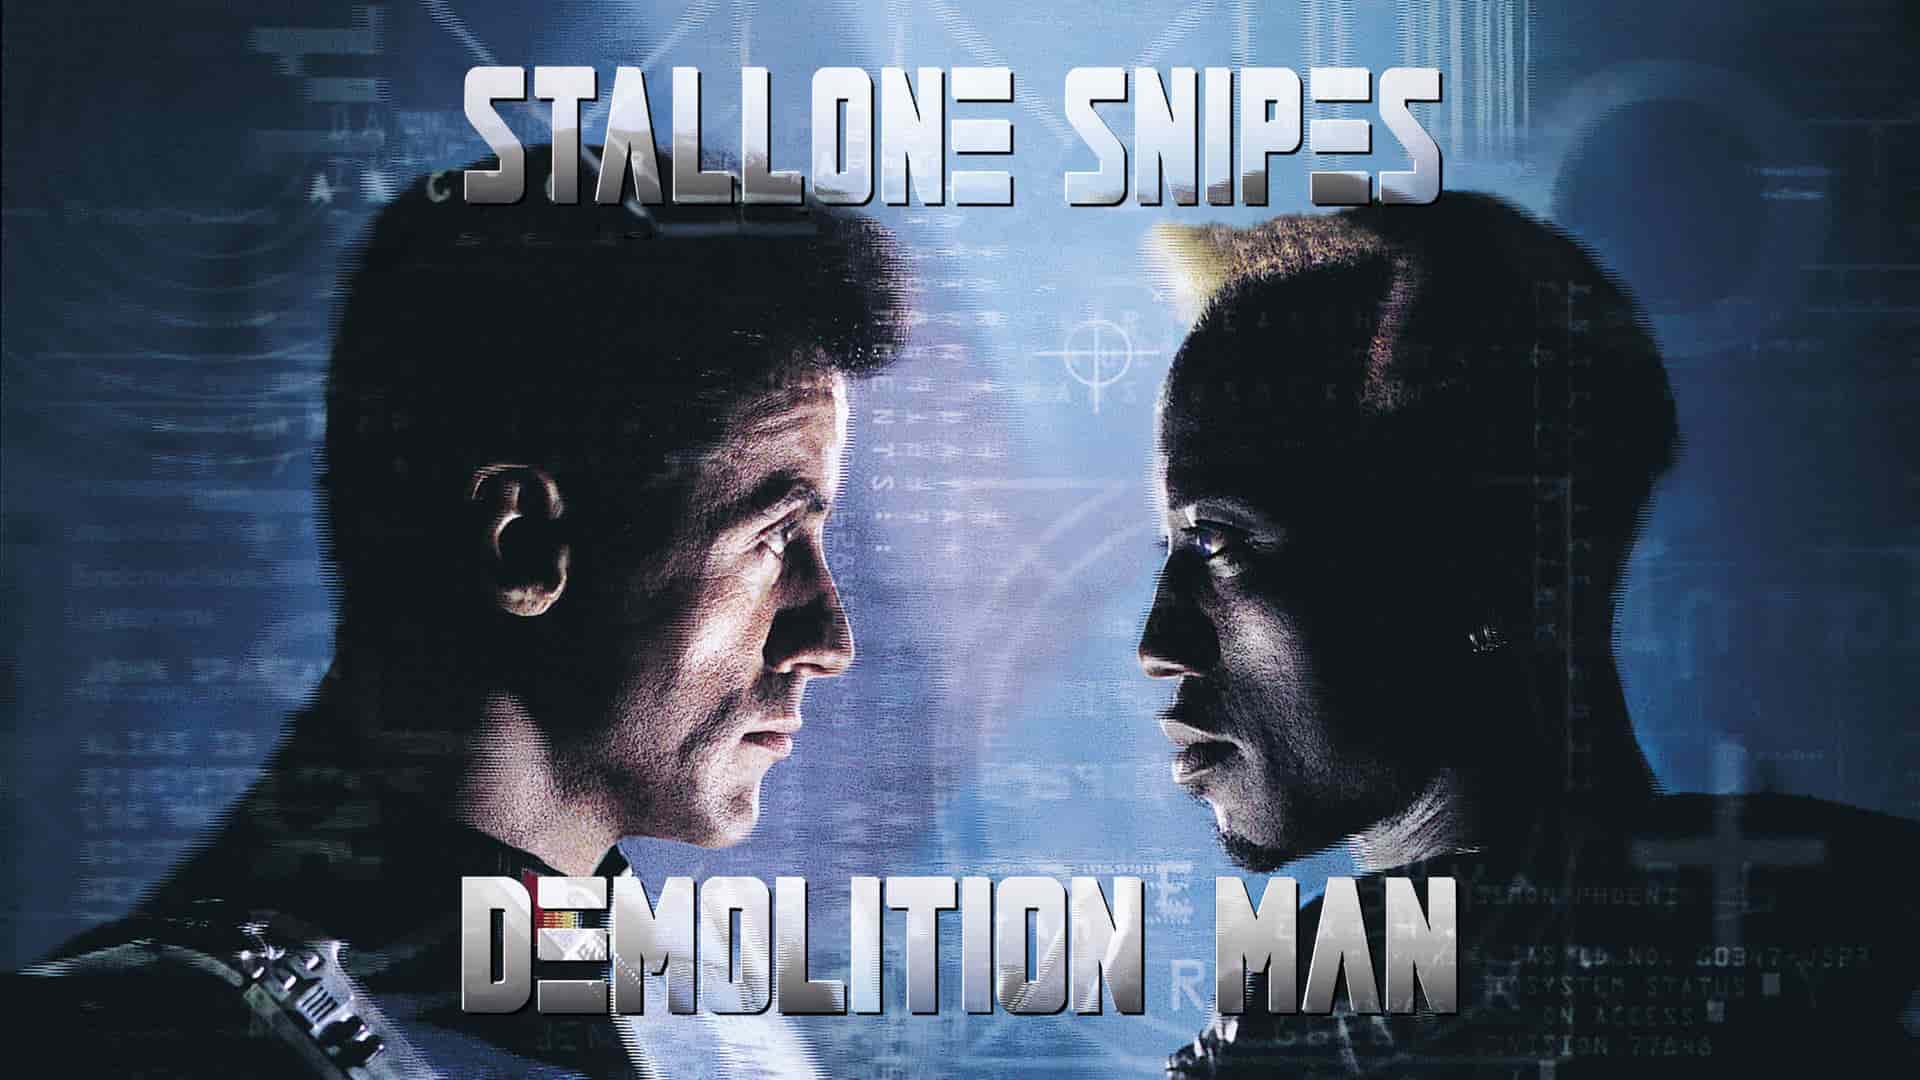 Title art for time travel movie Demolition Man